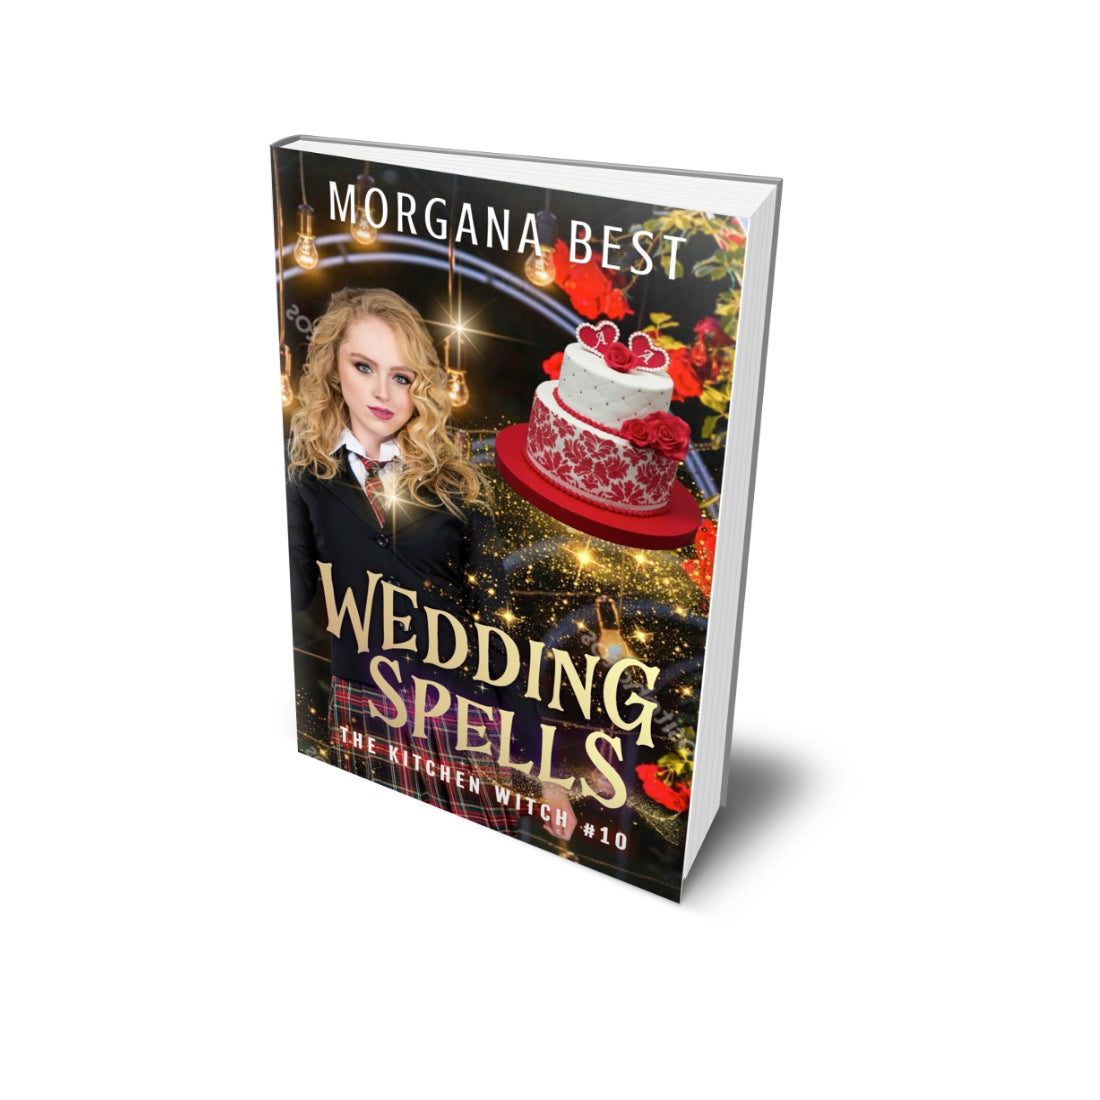 Wedding Spells paperback cozy mystery by morgana best